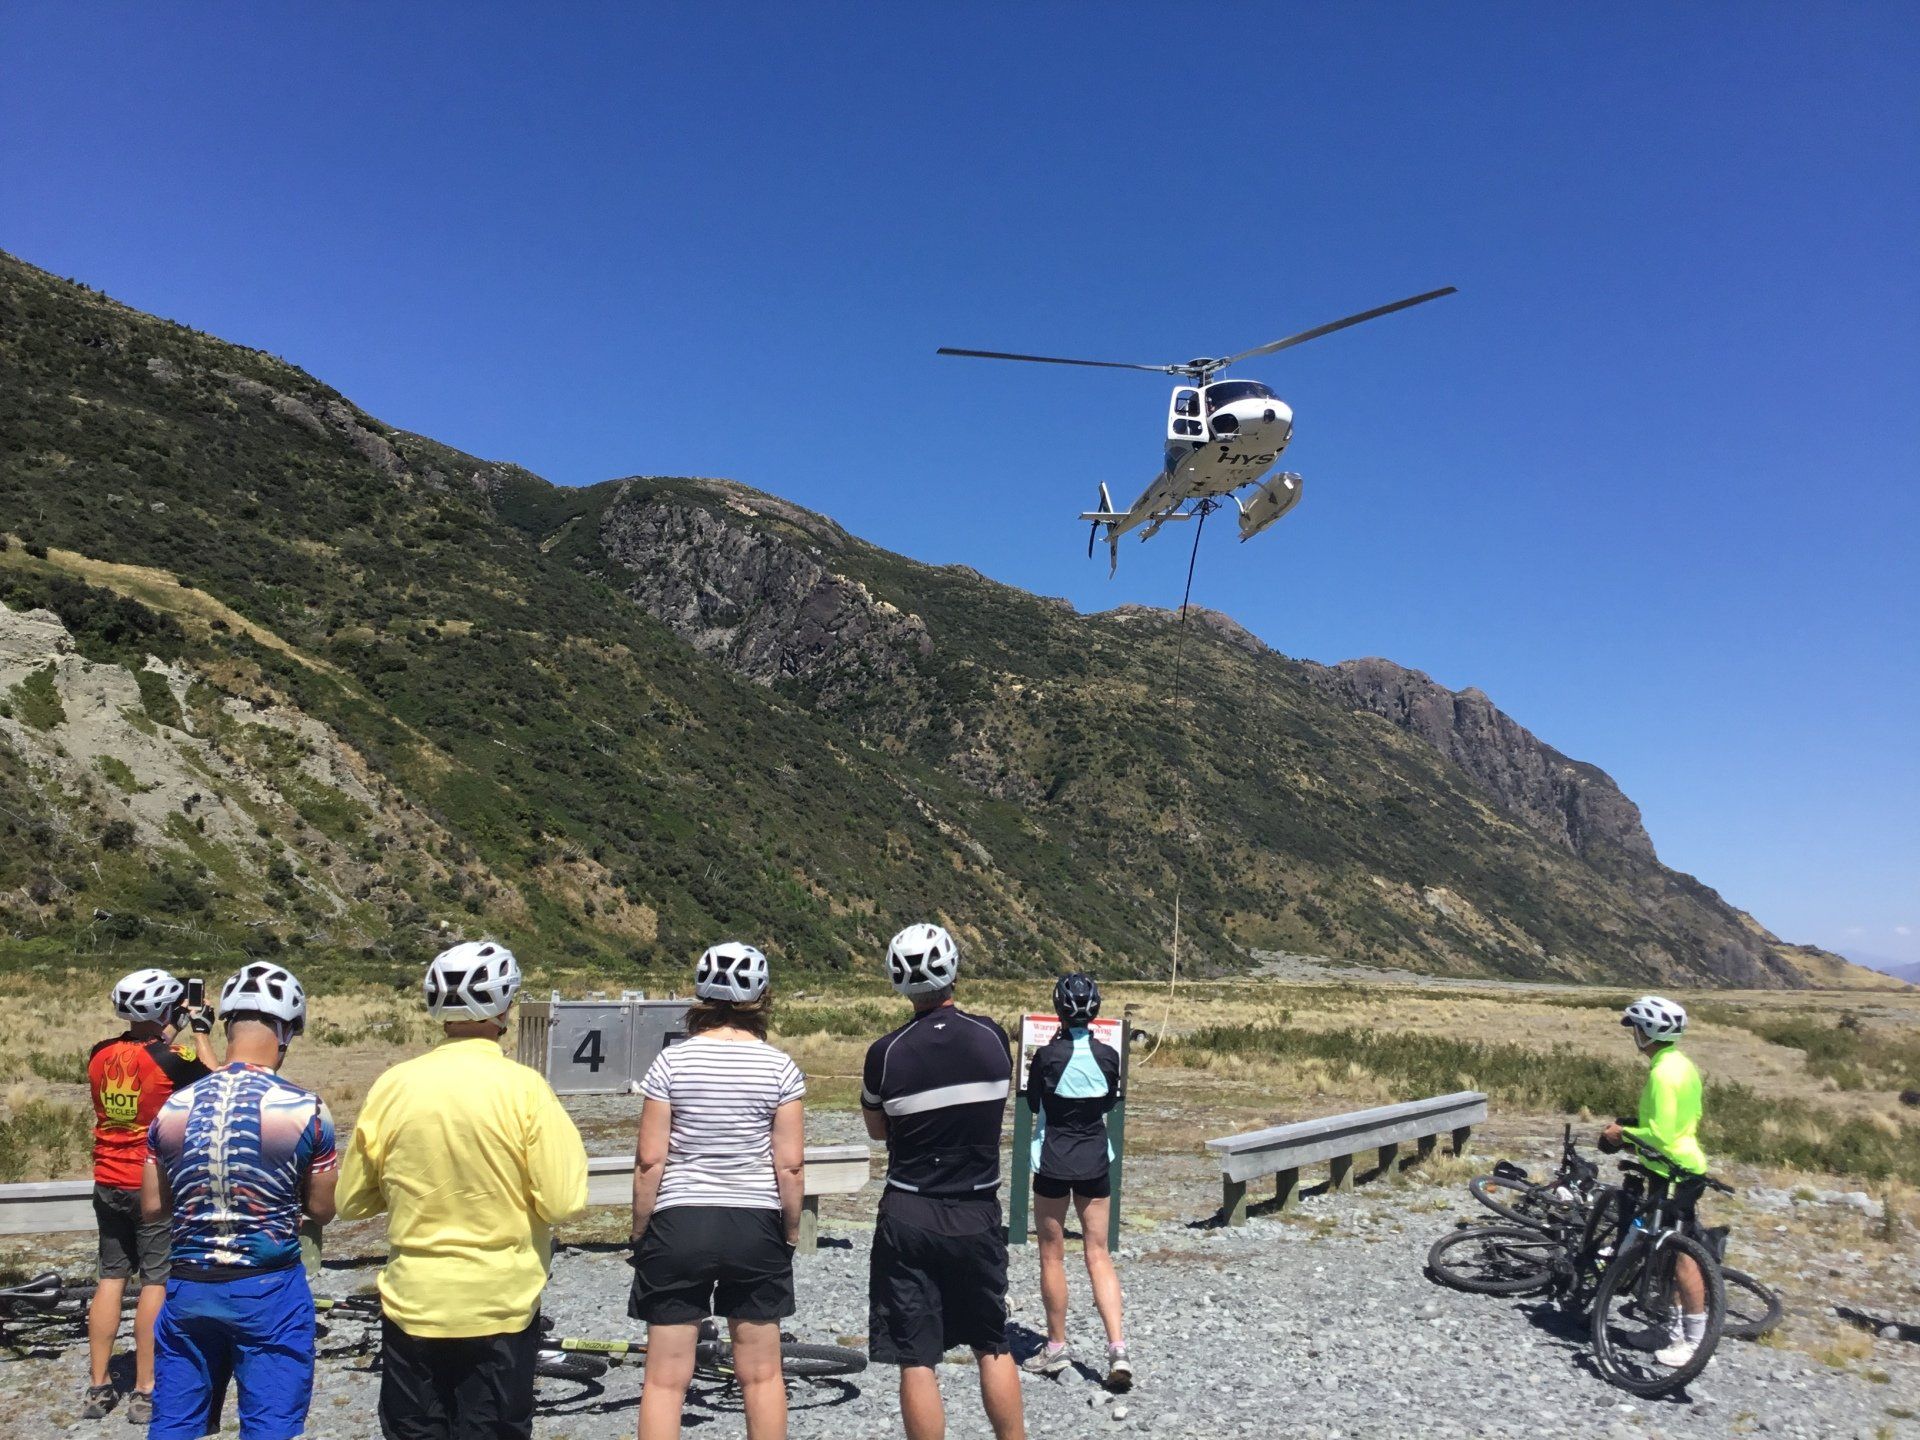 Alps 2 Ocean Helicopter across the Tasman River